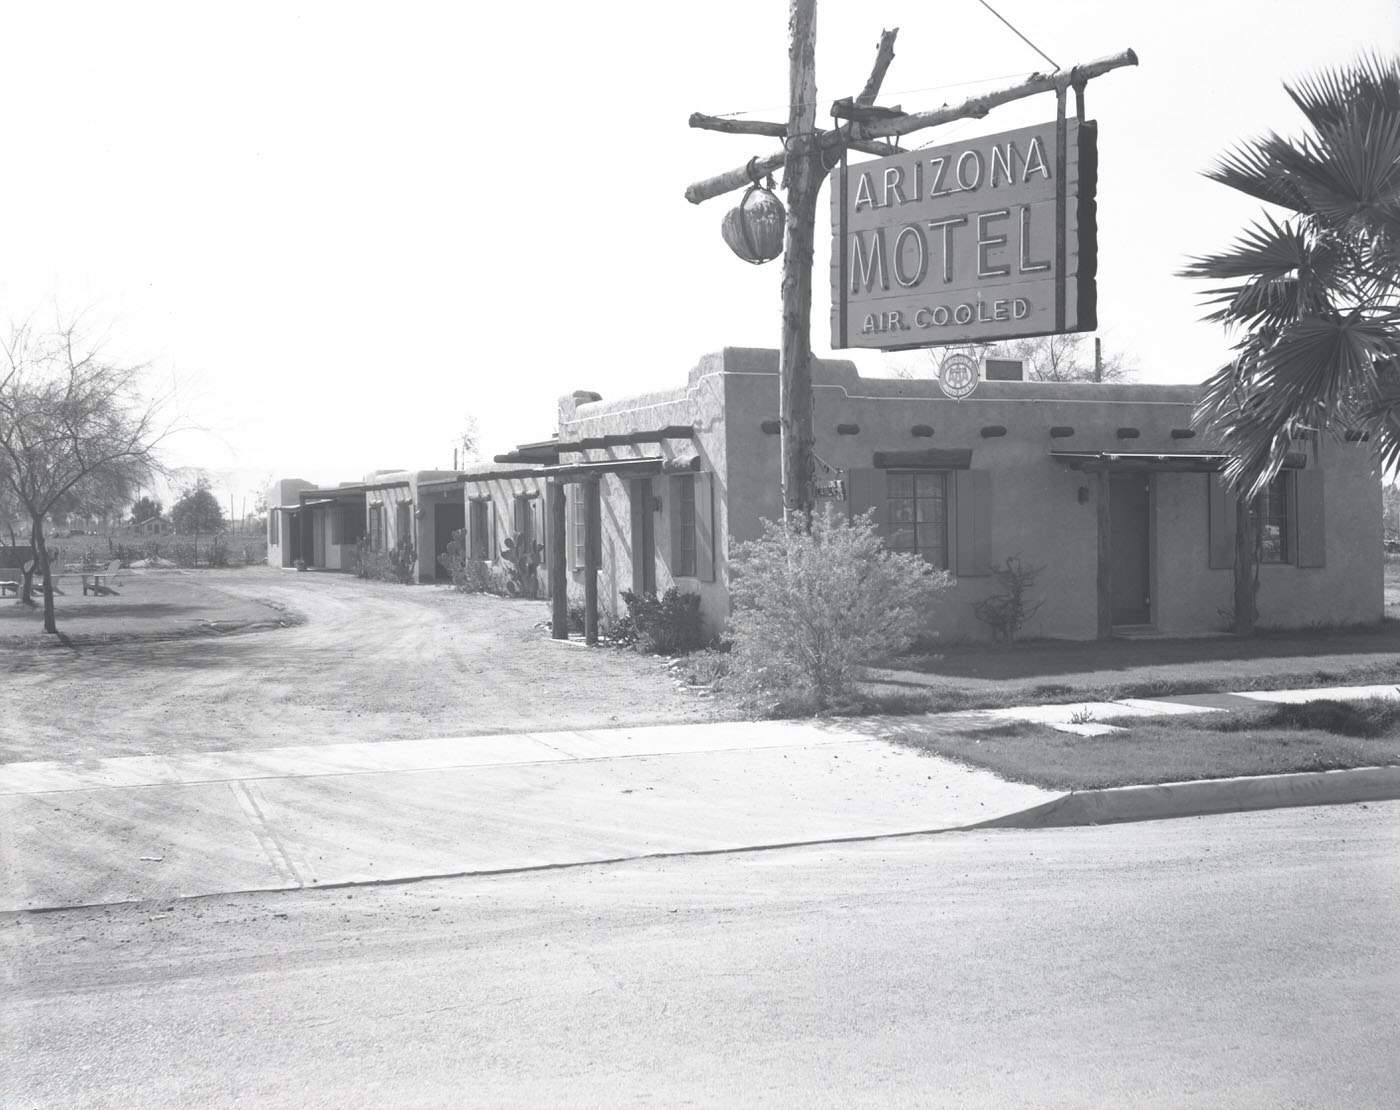 Arizona Motel. This motel is located at 2625 E. Van Buren Street in Phoenix, 1941